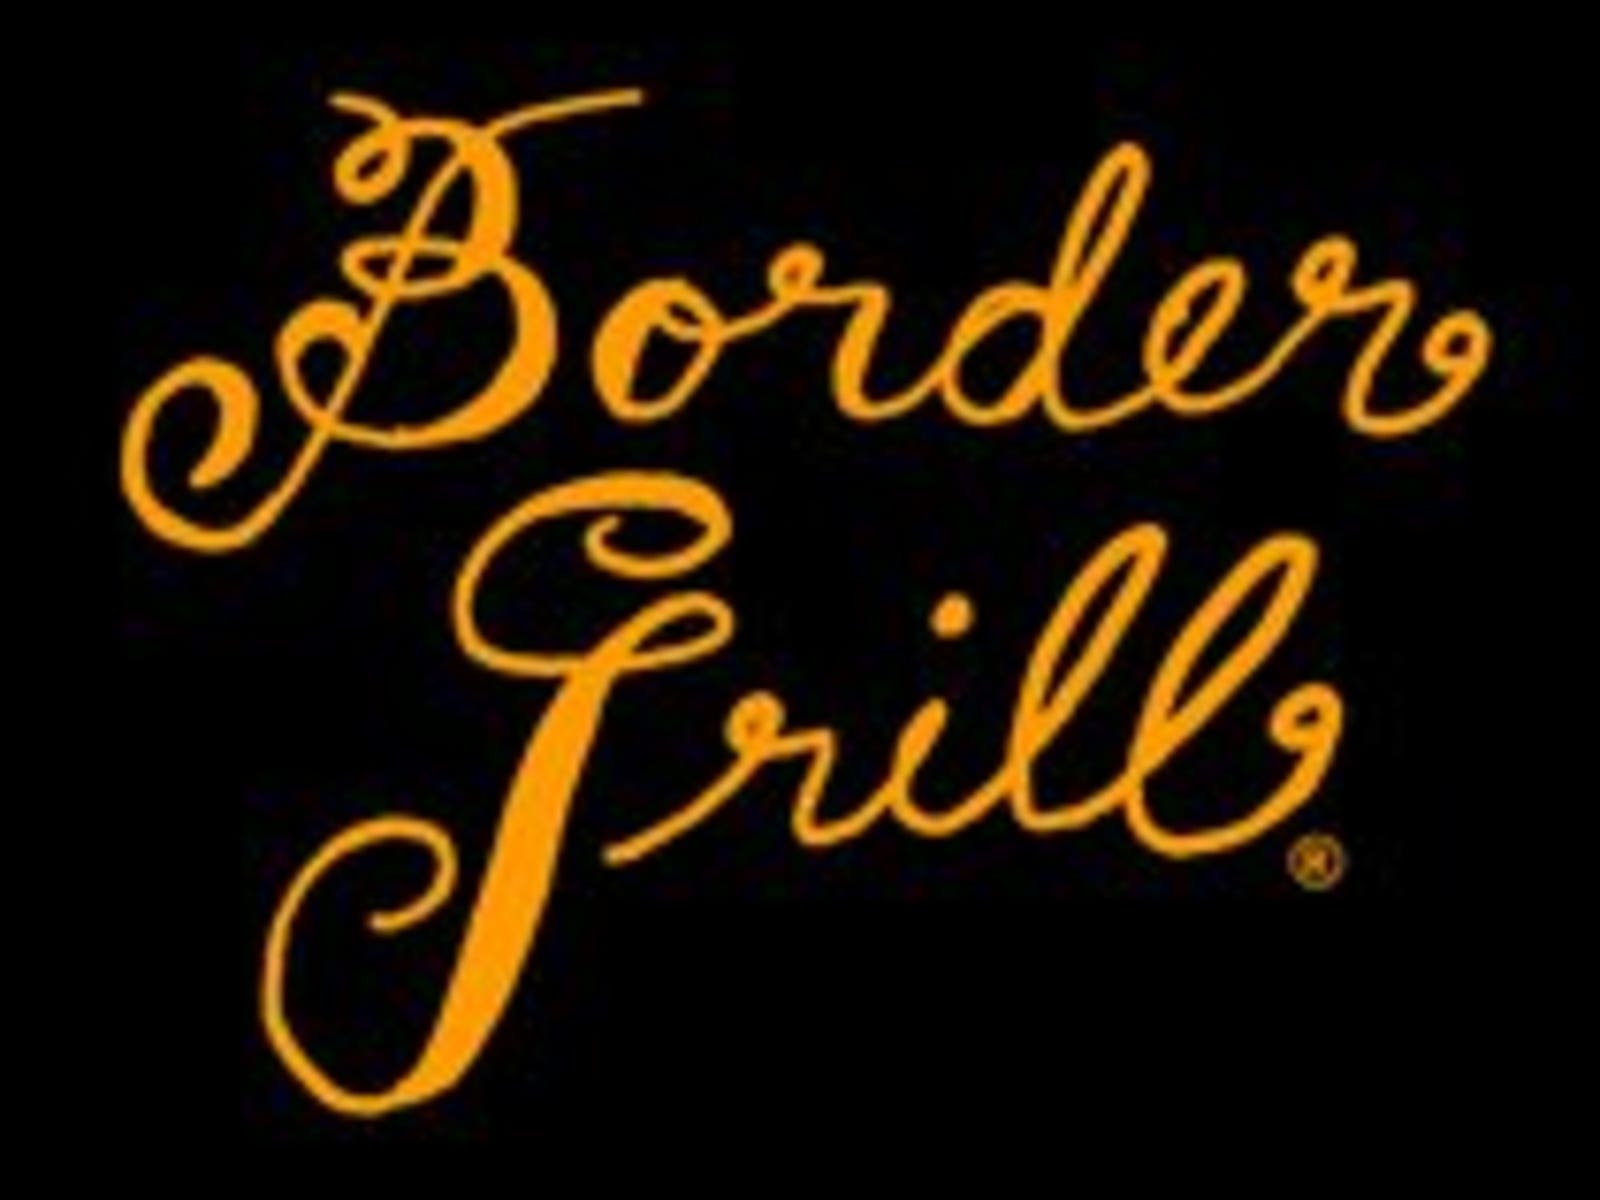 Border Grill